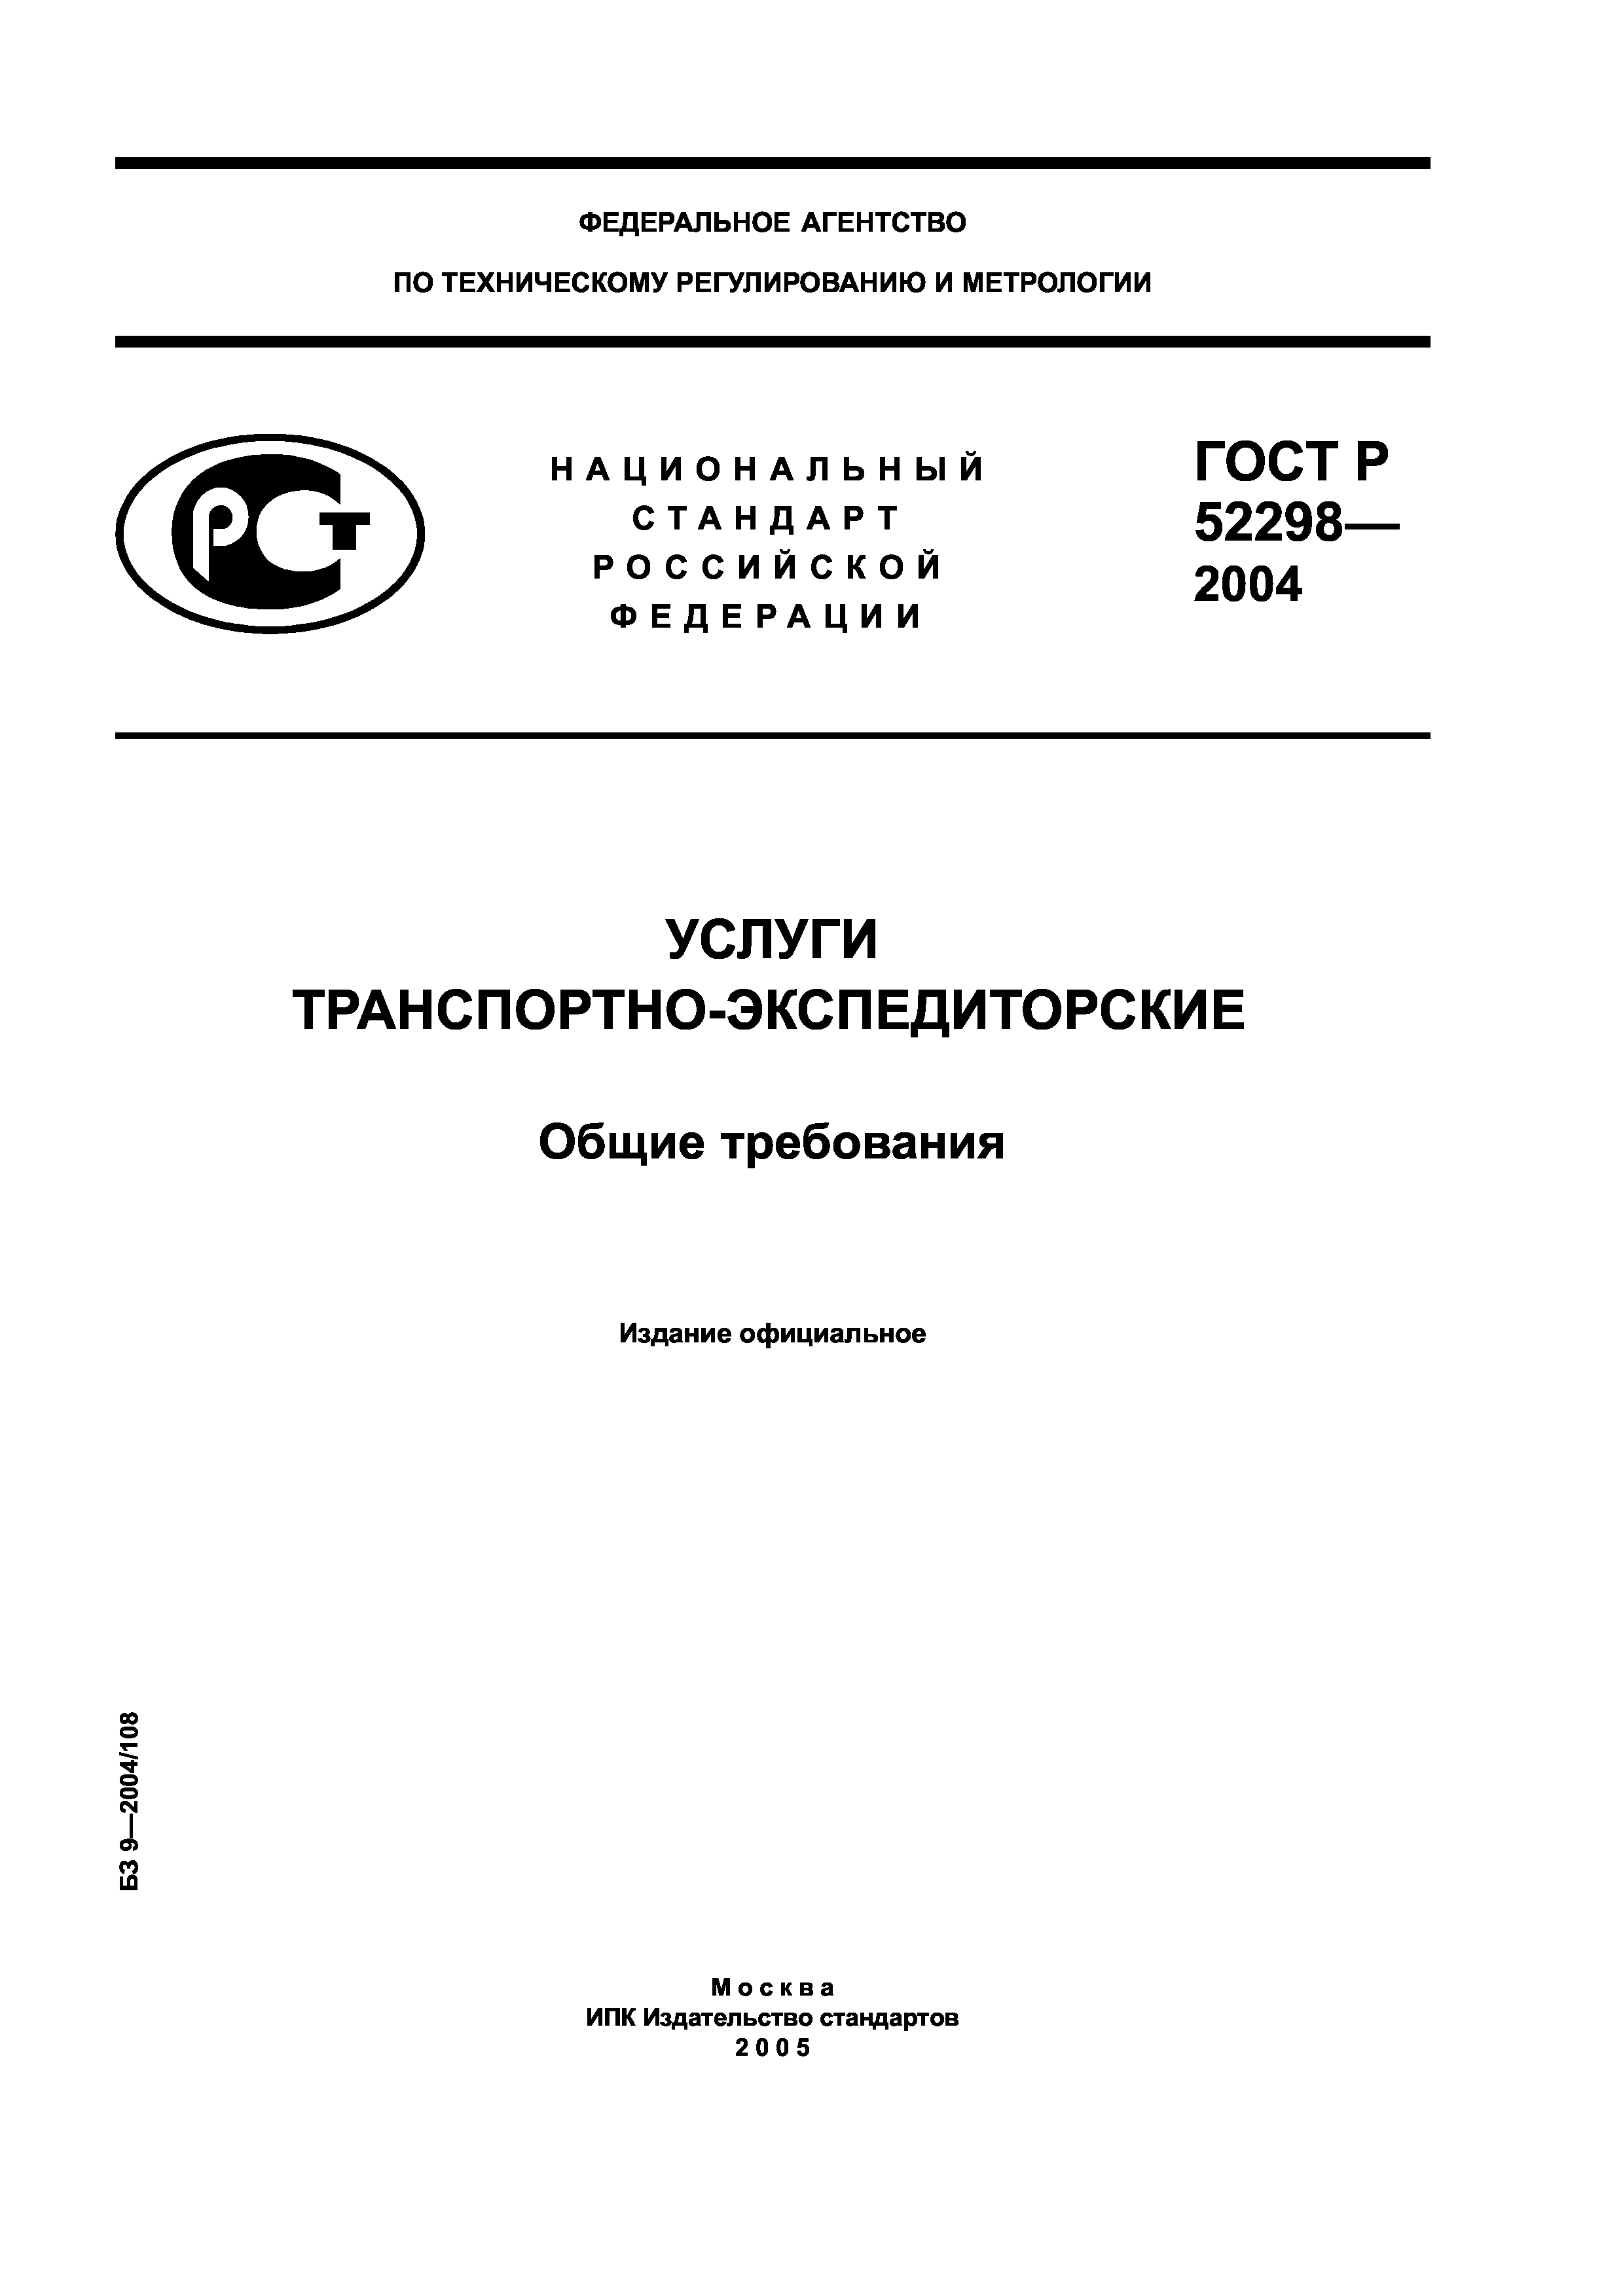 ГОСТ Р 52298-2004